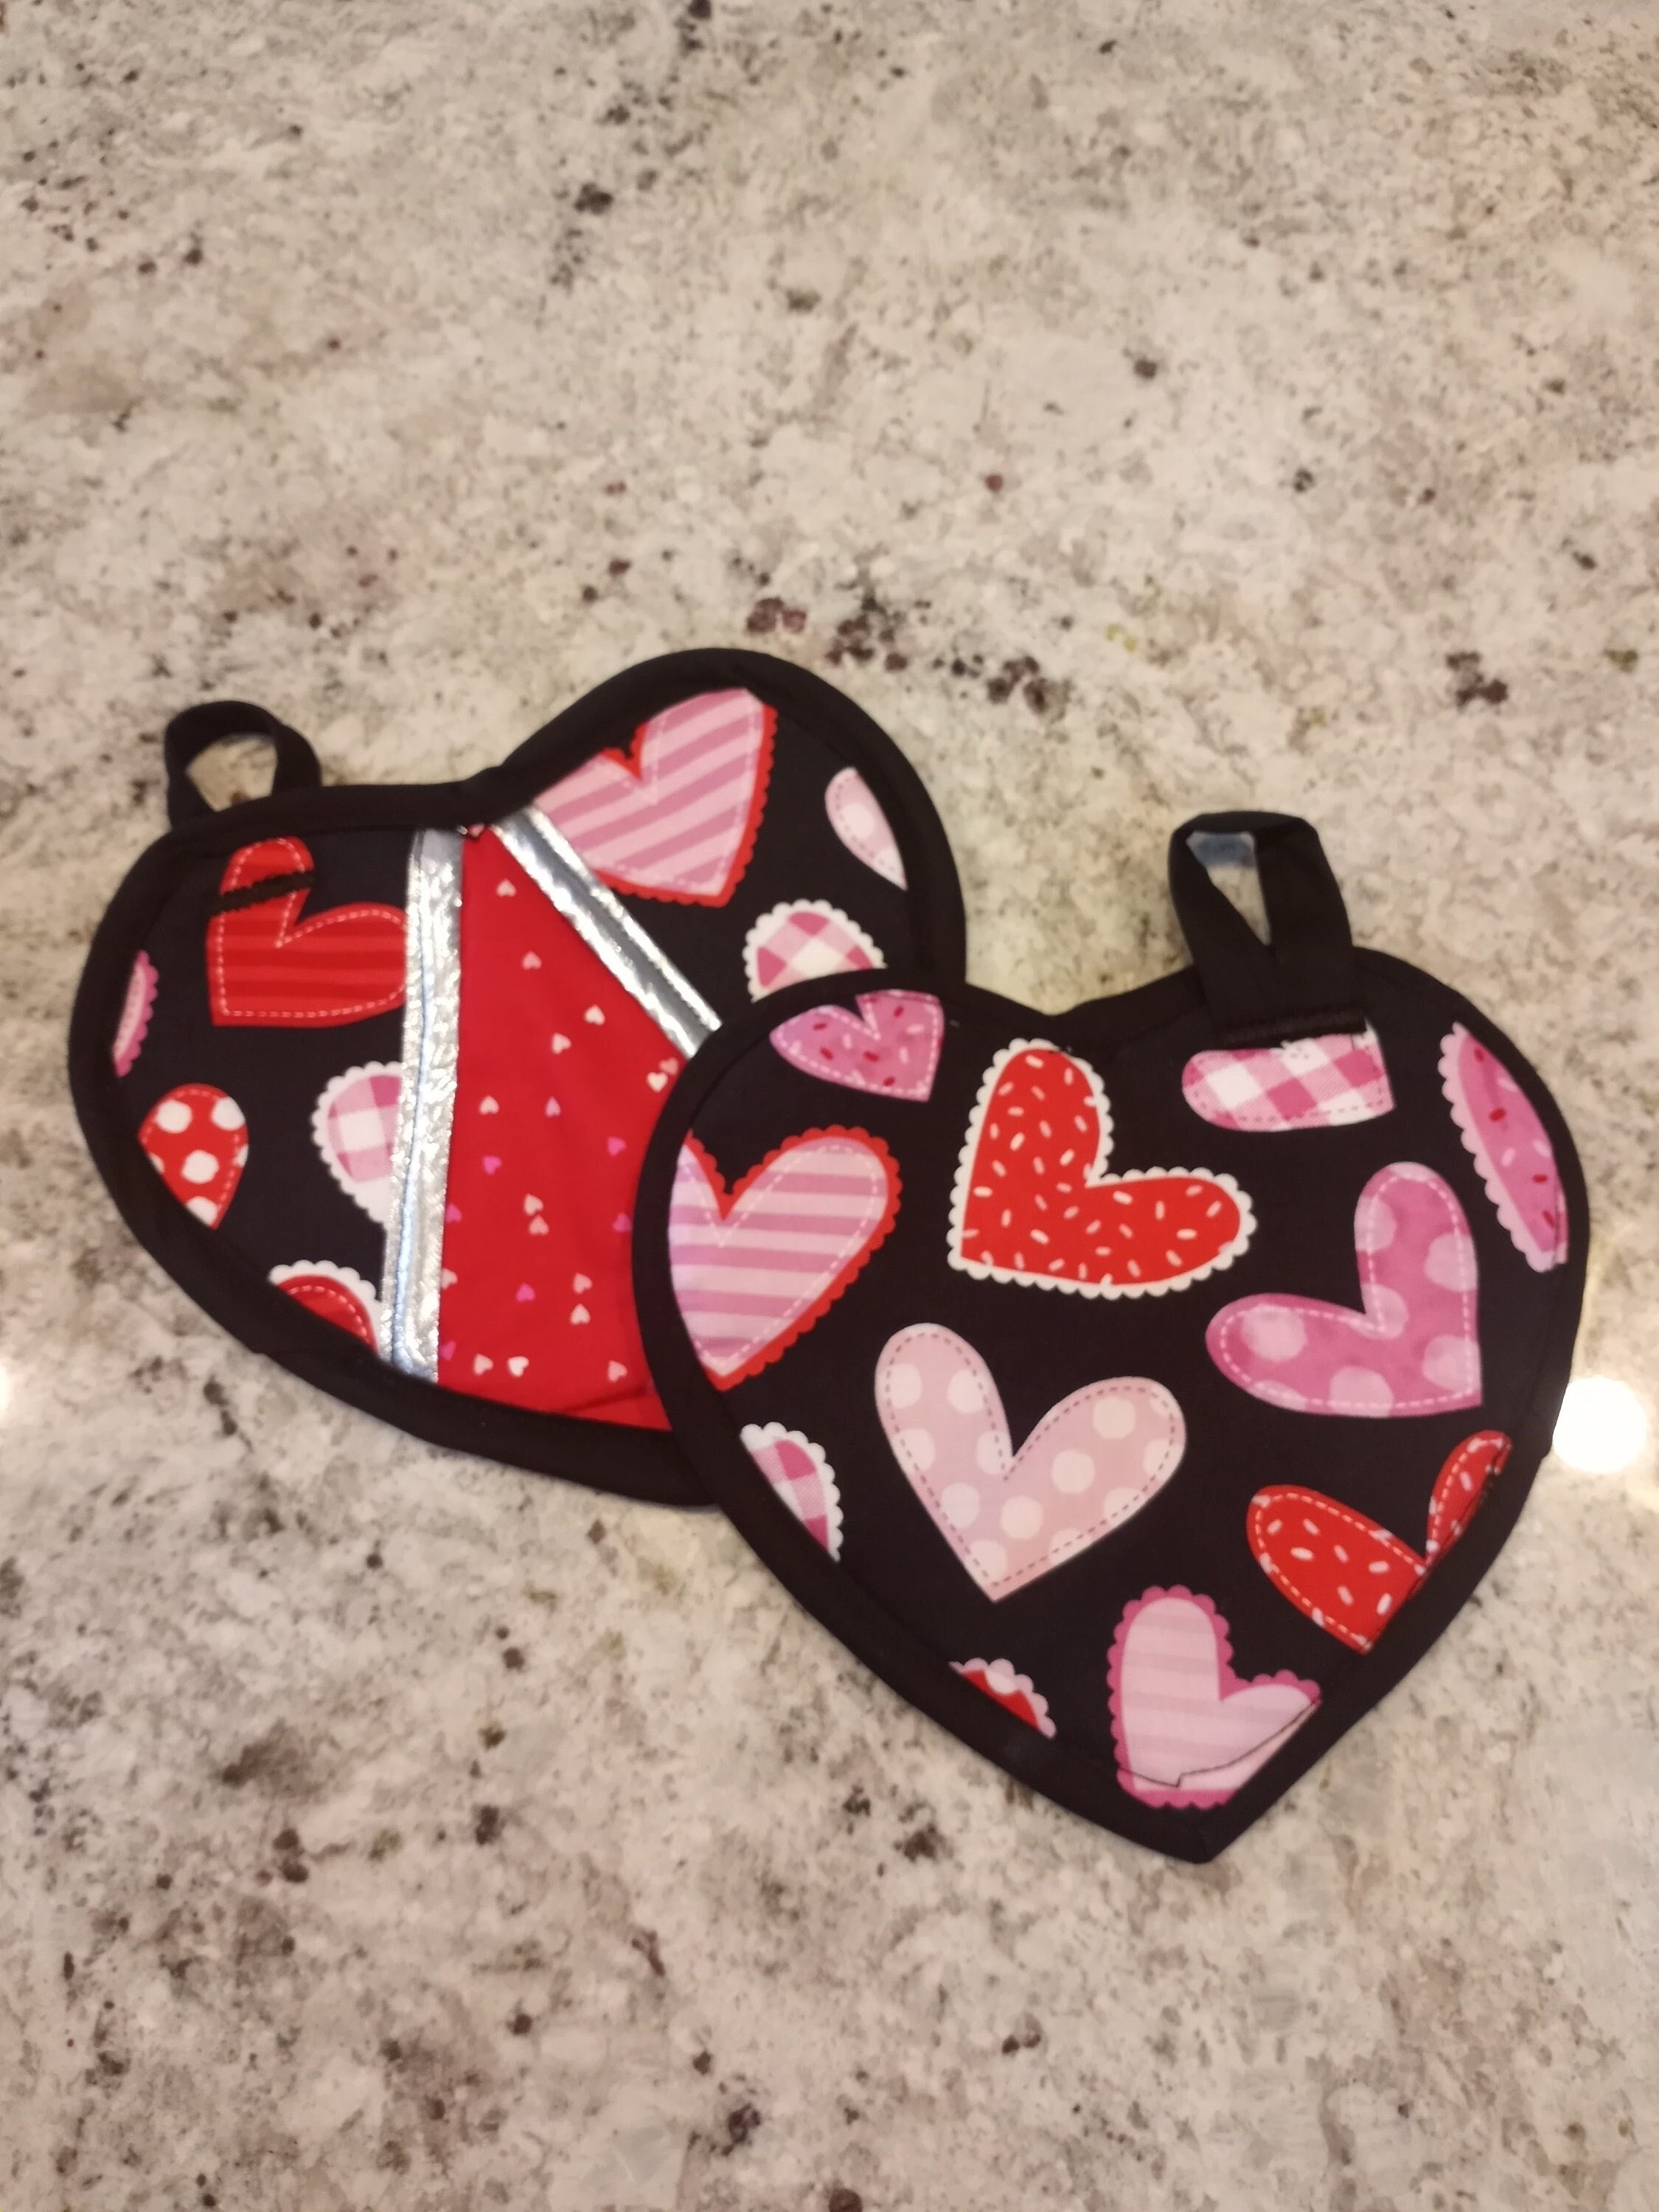 Cute Black Cat Love Oven Mitts & Pot Holders 2pcs Valentine Pink Hearts  Decorative Kitchen Heat Resistant Non-Slip Potholders Set for Women Cooking